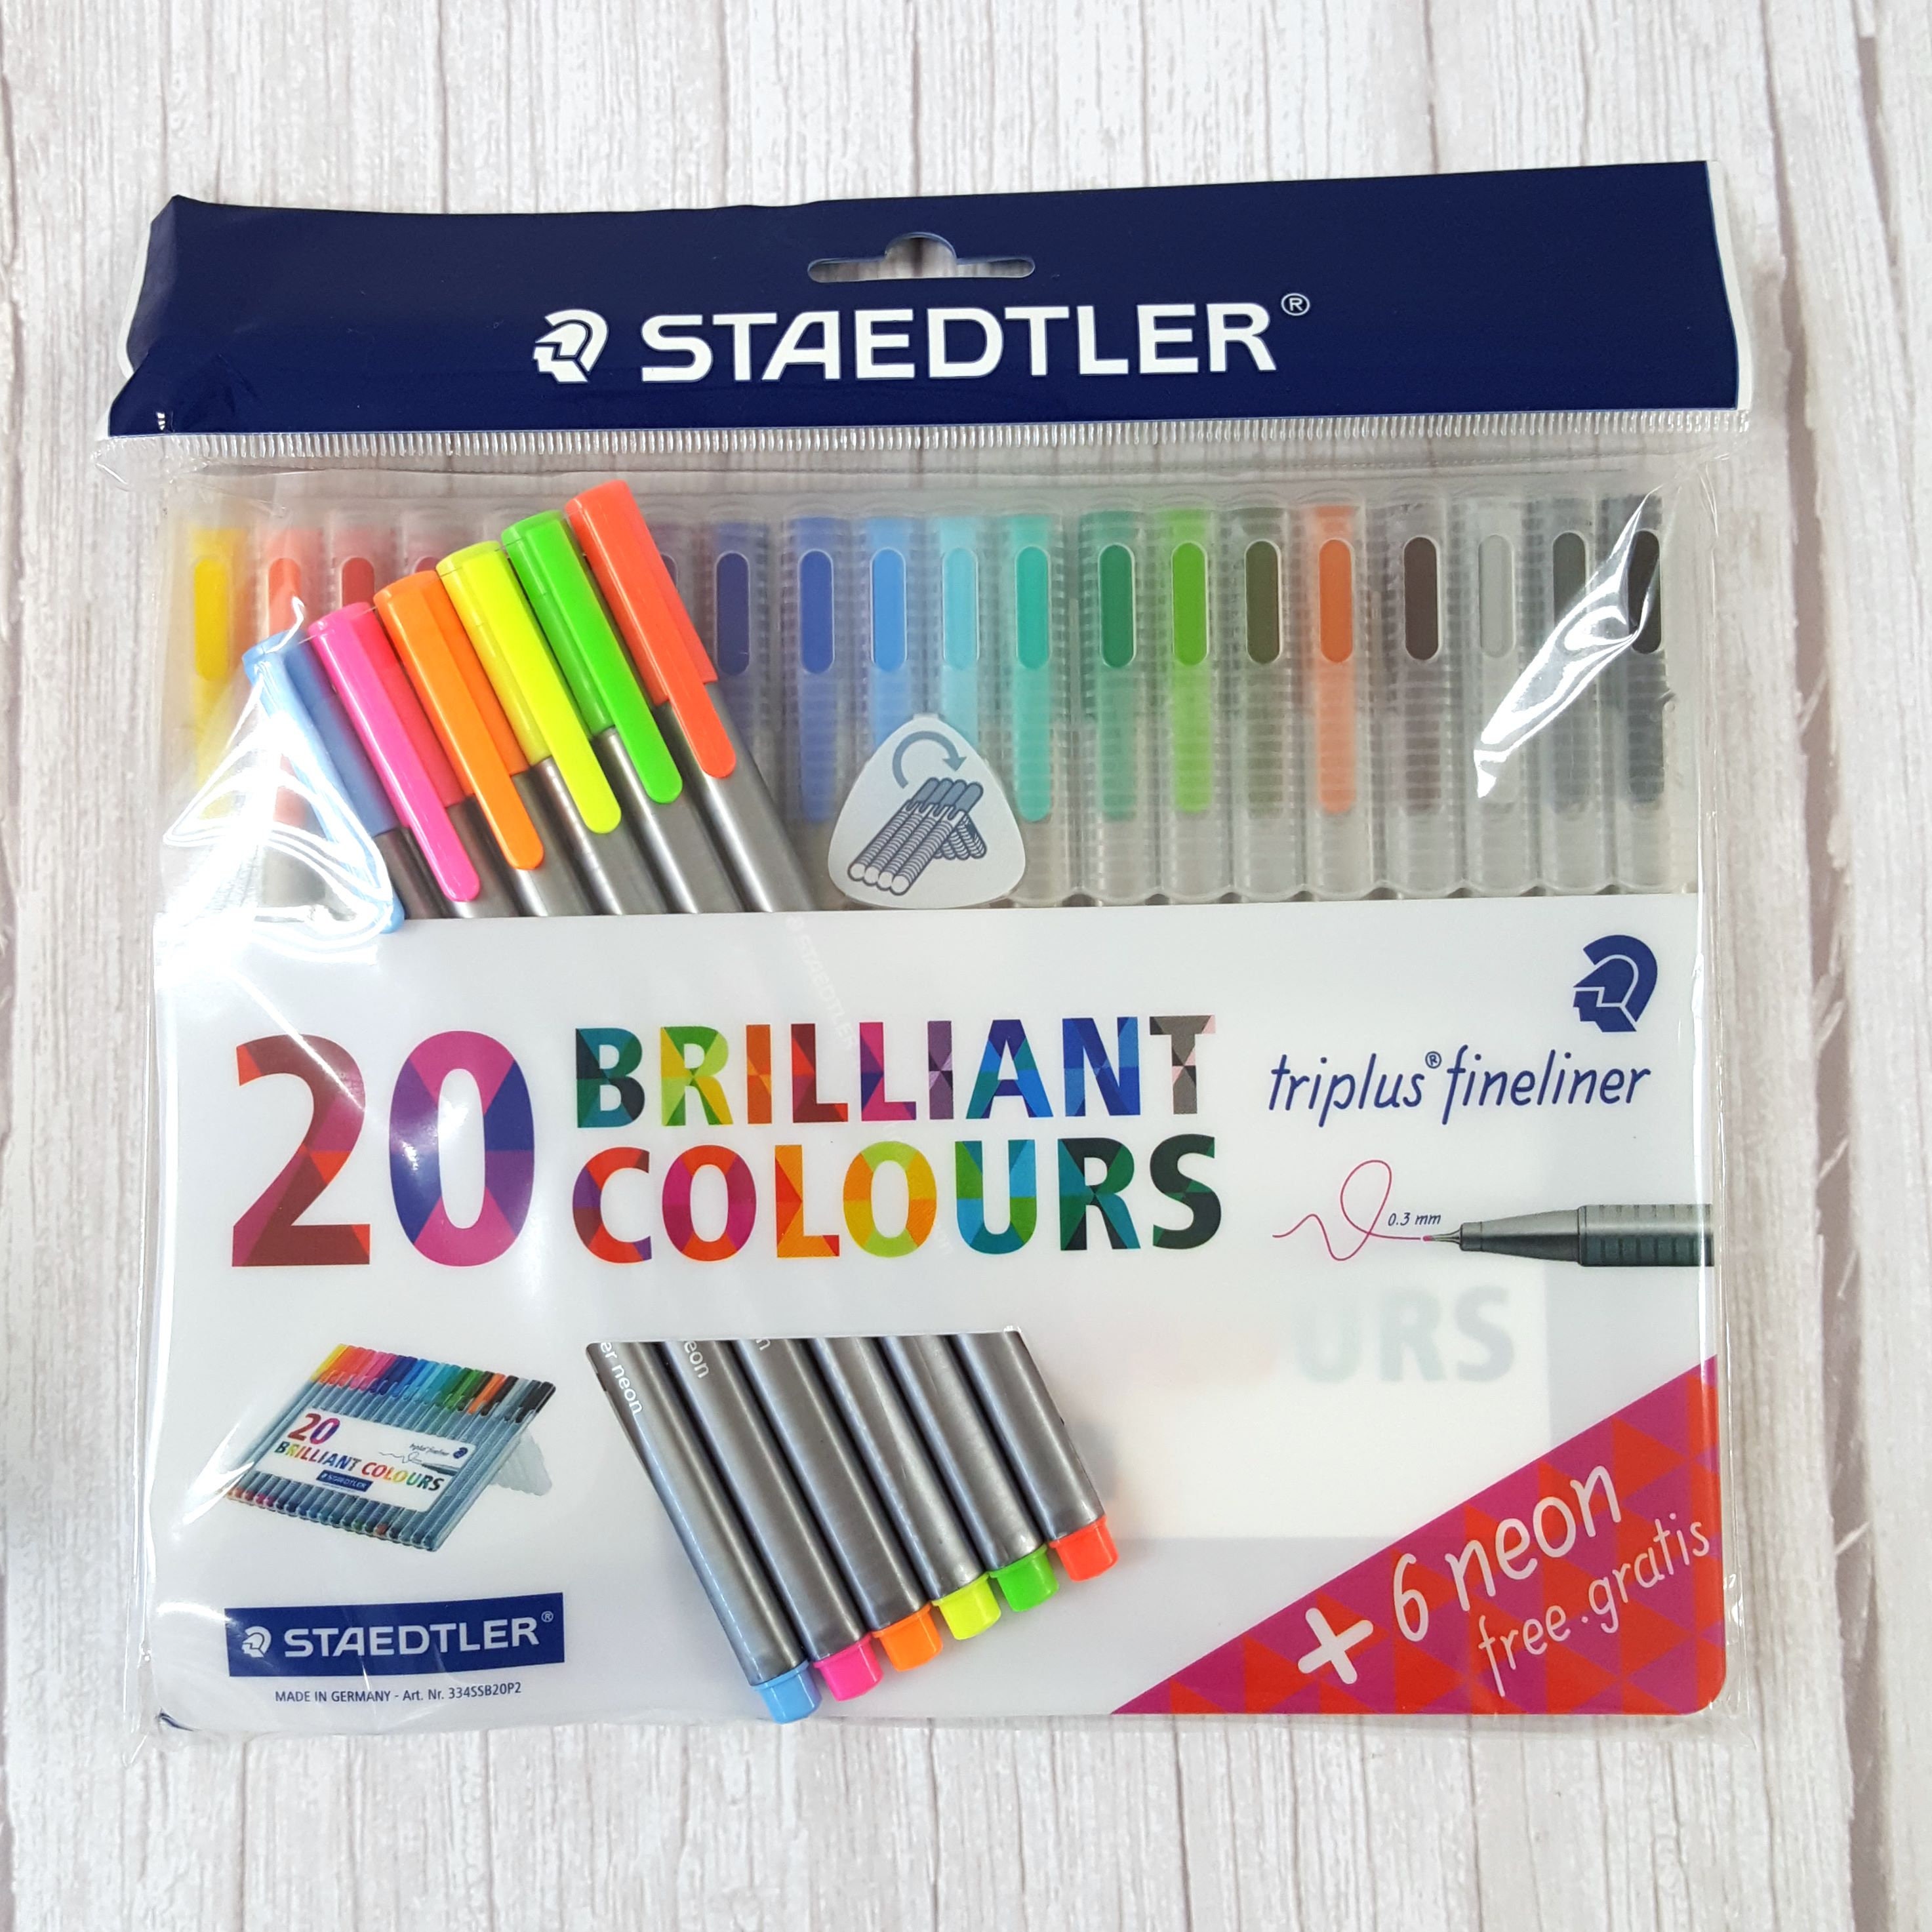 Staedtler Triplus Fineliner Pens - Neon Colors, Set of 6